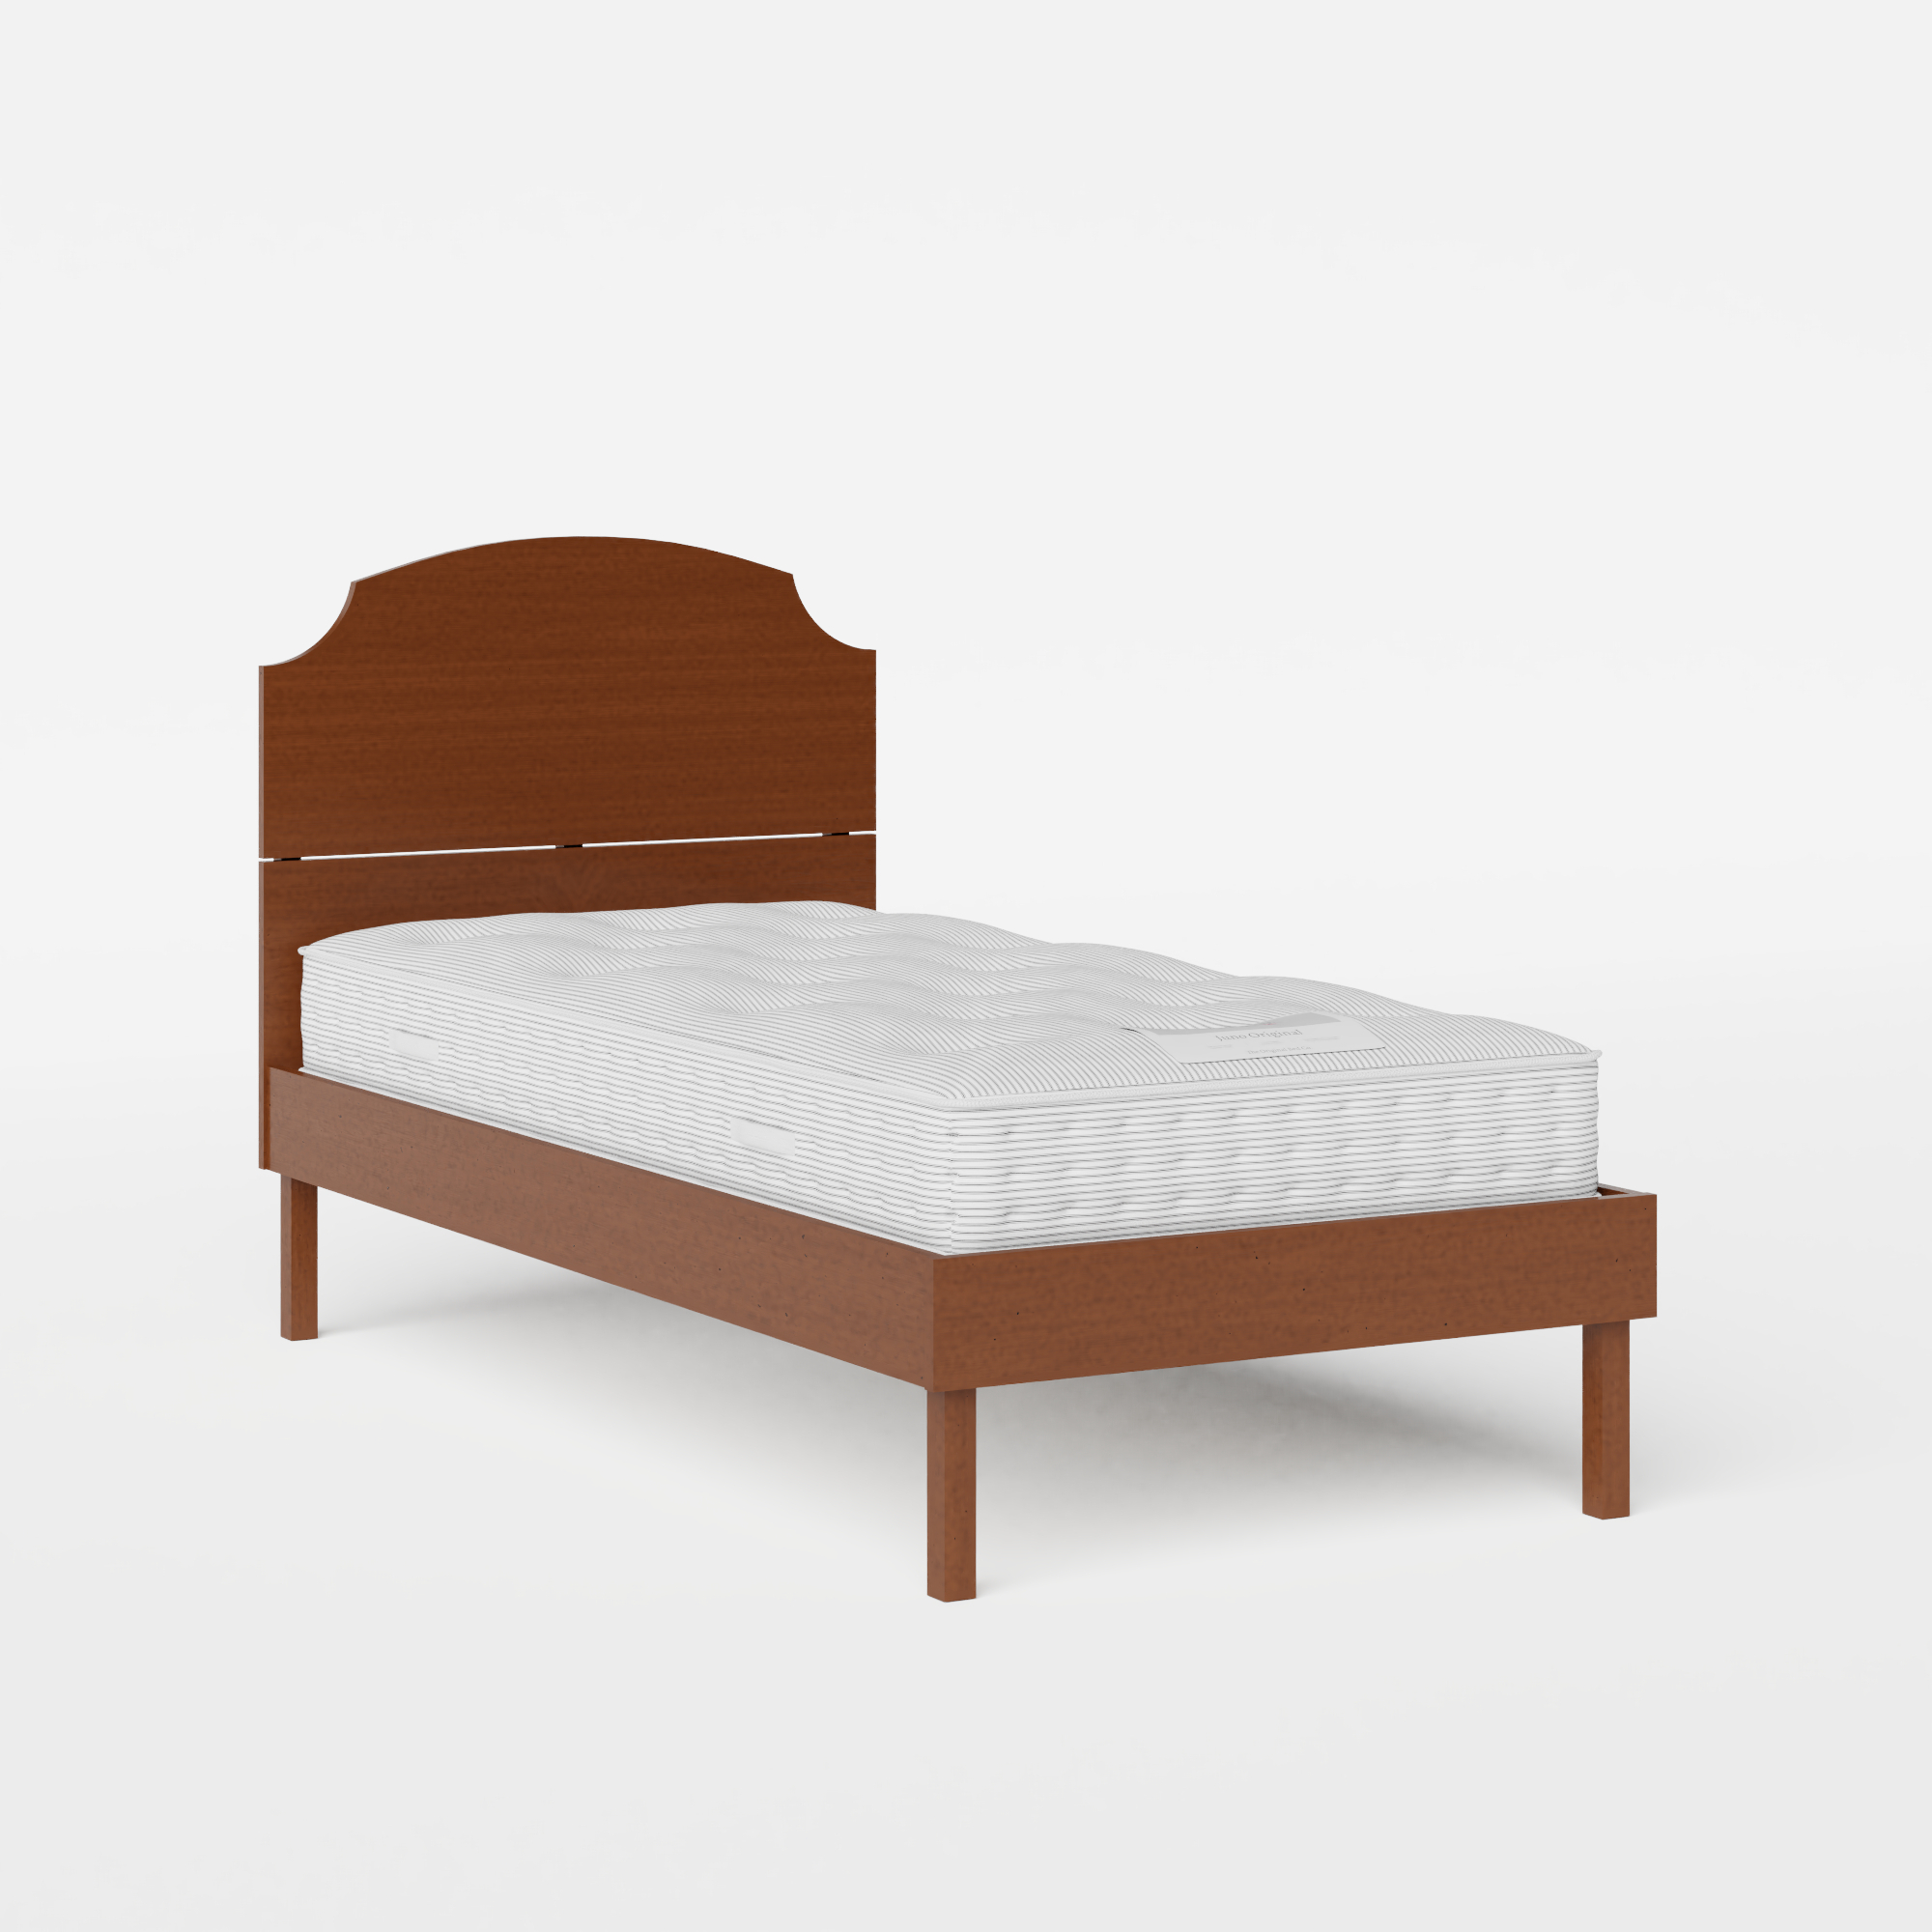 Kobe single wood bed in dark cherry with Juno mattress